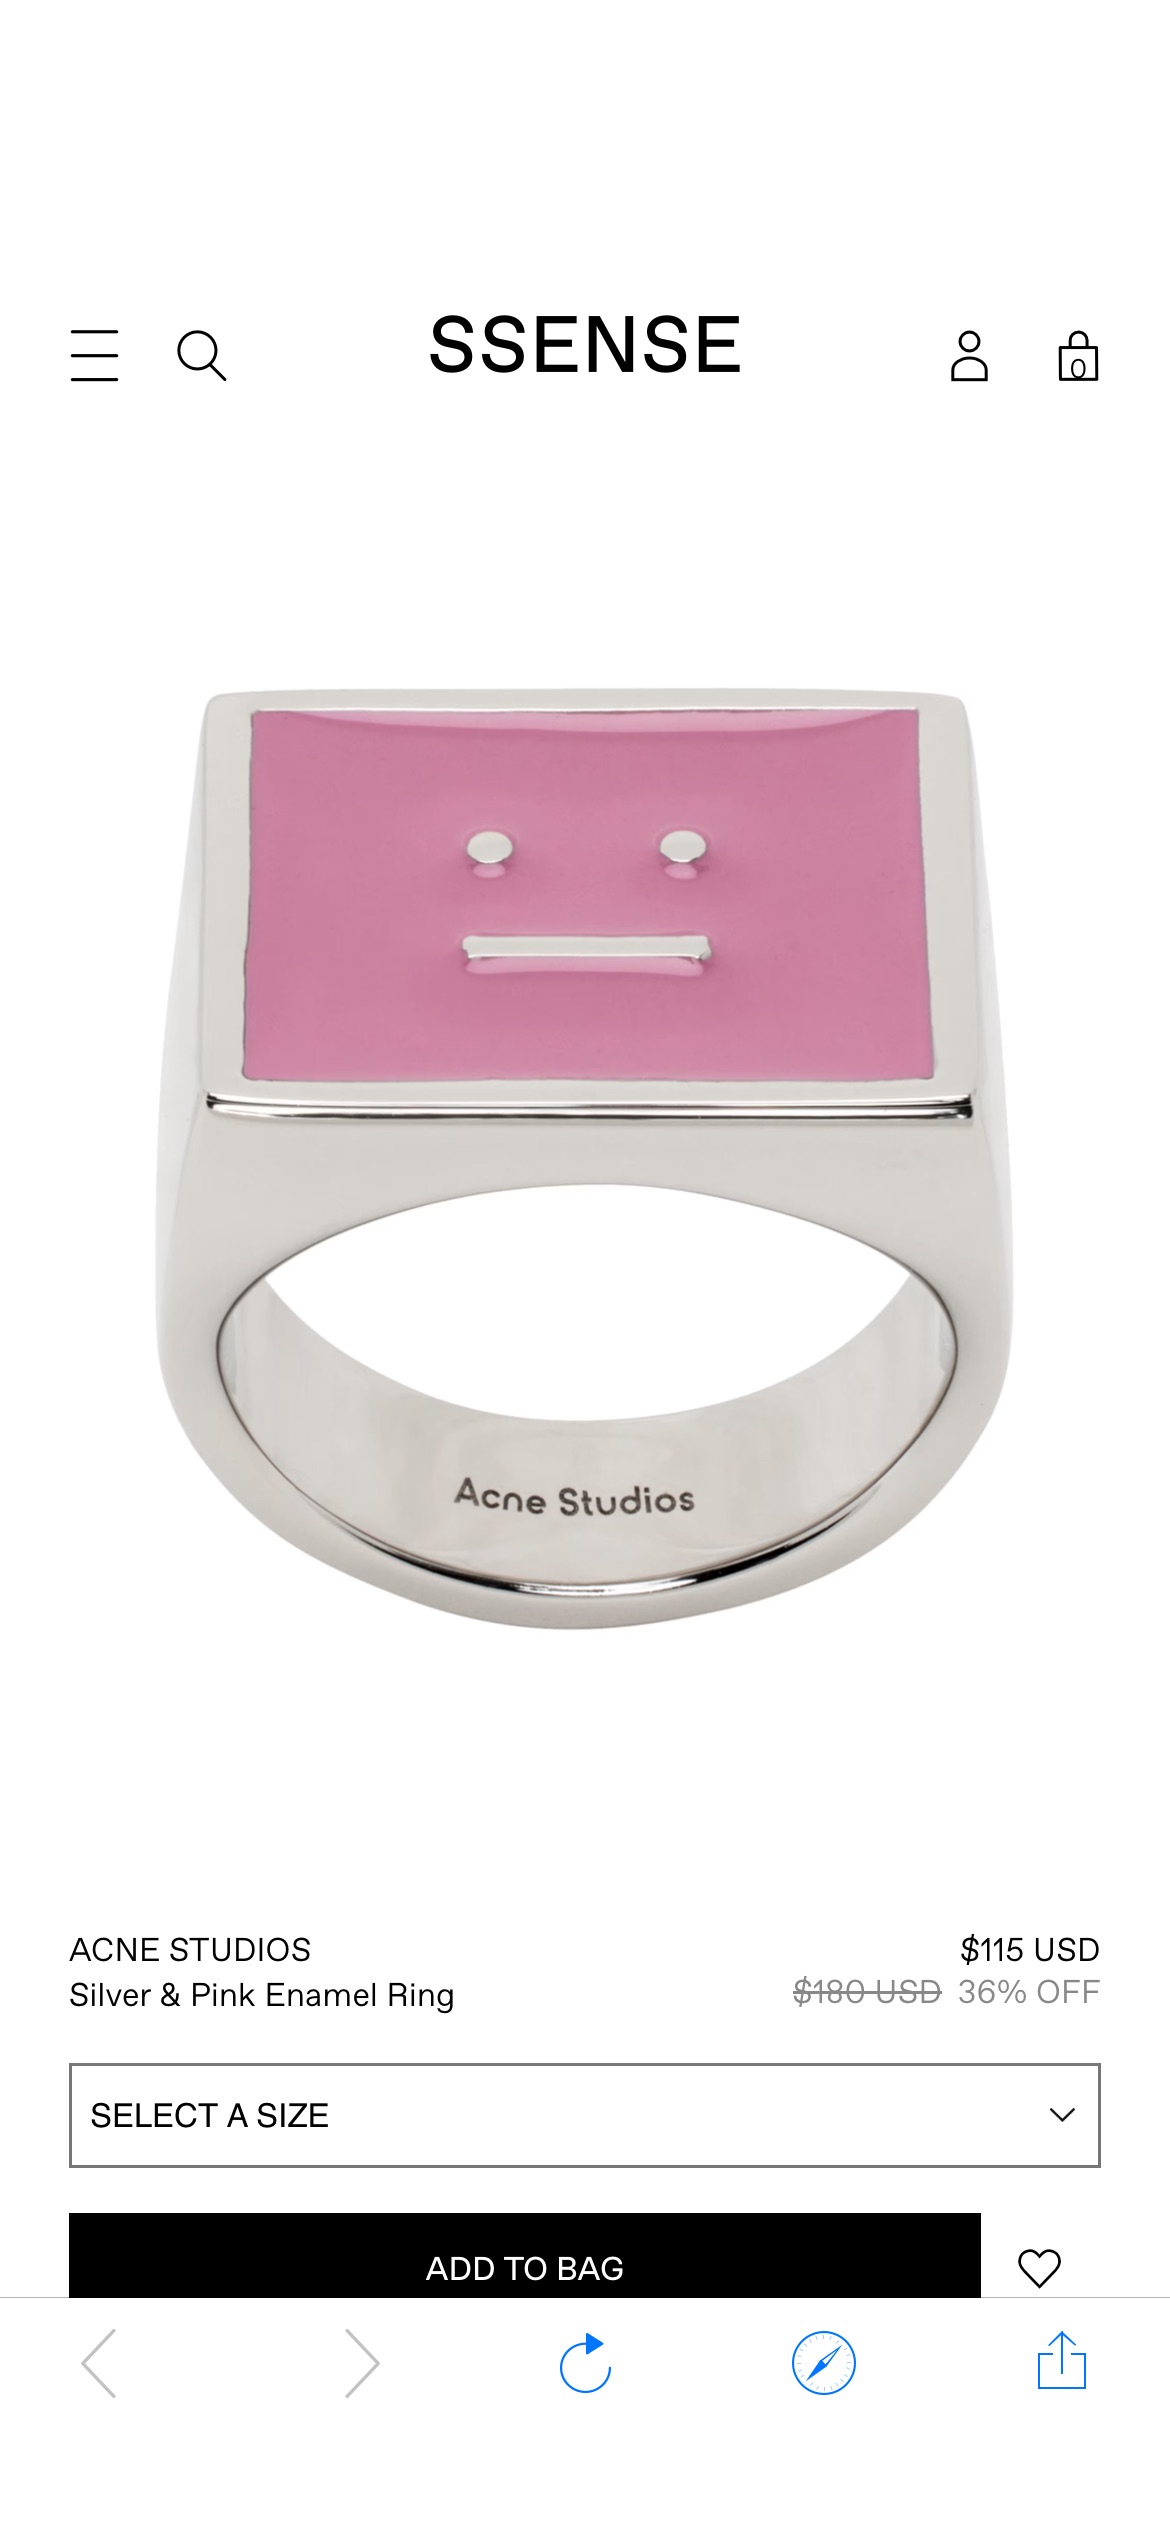 Silver & Pink Enamel Ring by Acne Studios on Sale